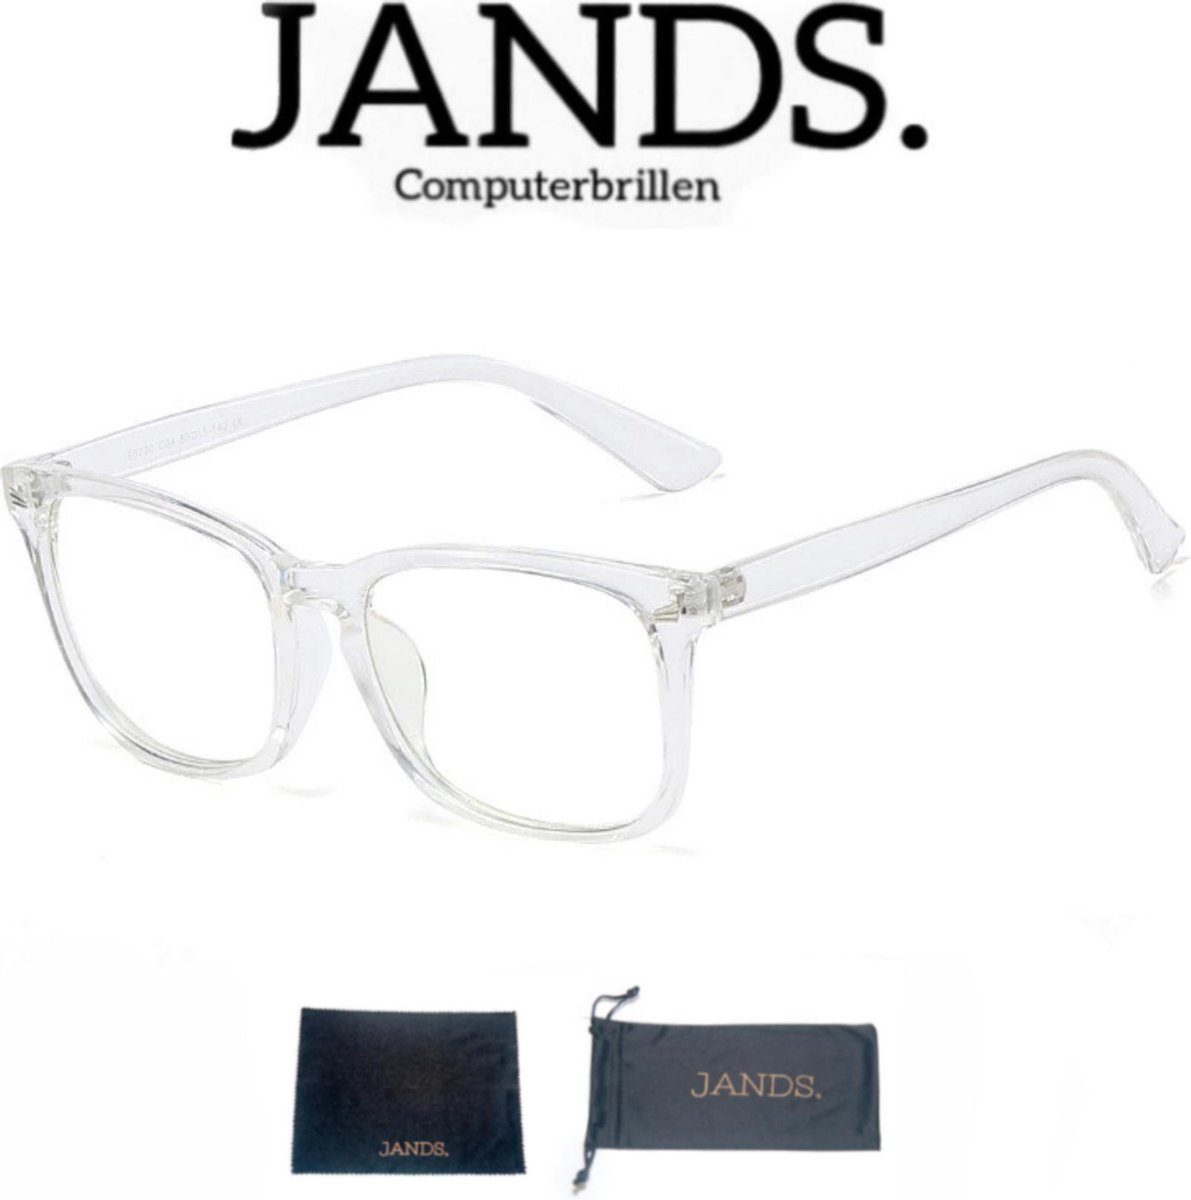 JANDS. NR.6 - Computerbril - Blauw Licht Bril - Blue Light Glasses - Beeldschermbril - Tegen Vermoeide Ogen - Zonder Sterkte - Unisex - Transparant - Met Gratis Accessoires